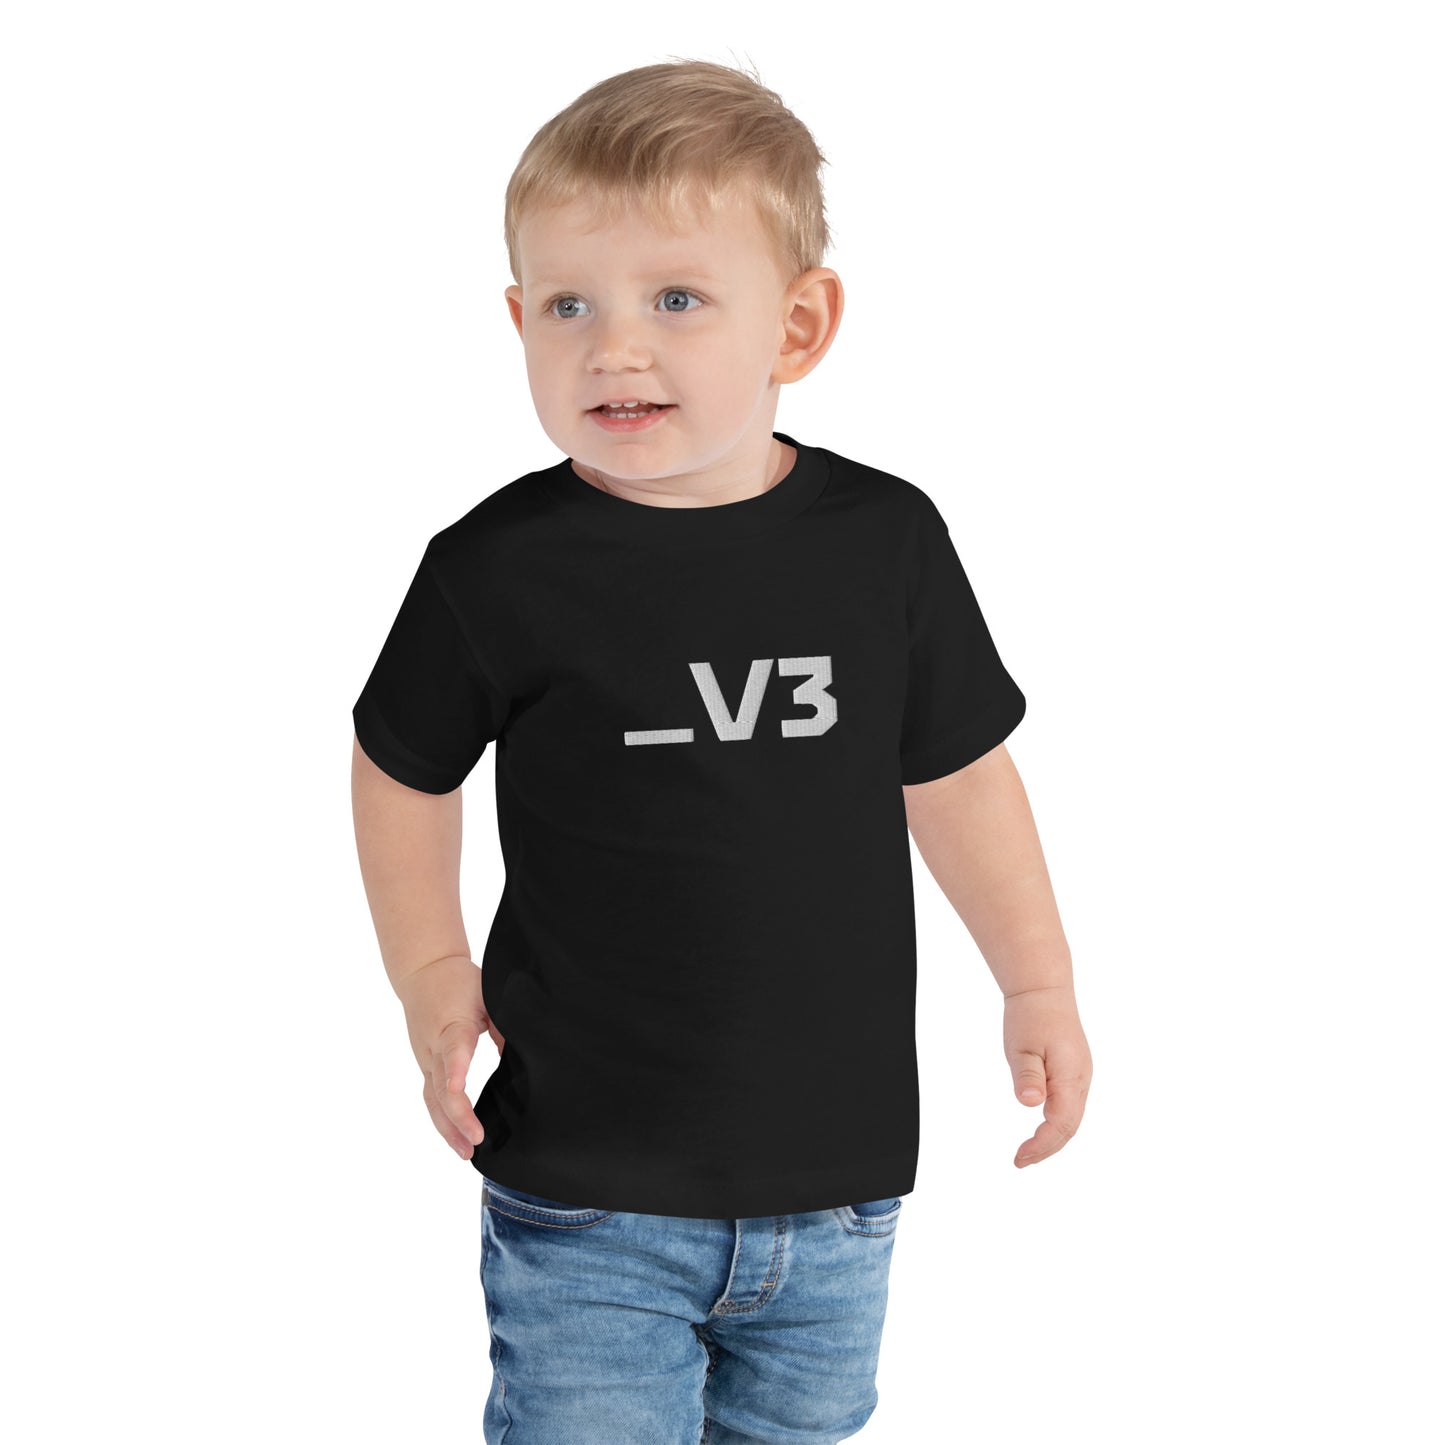 _V3 Embroidered Toddler Short Sleeve Tee